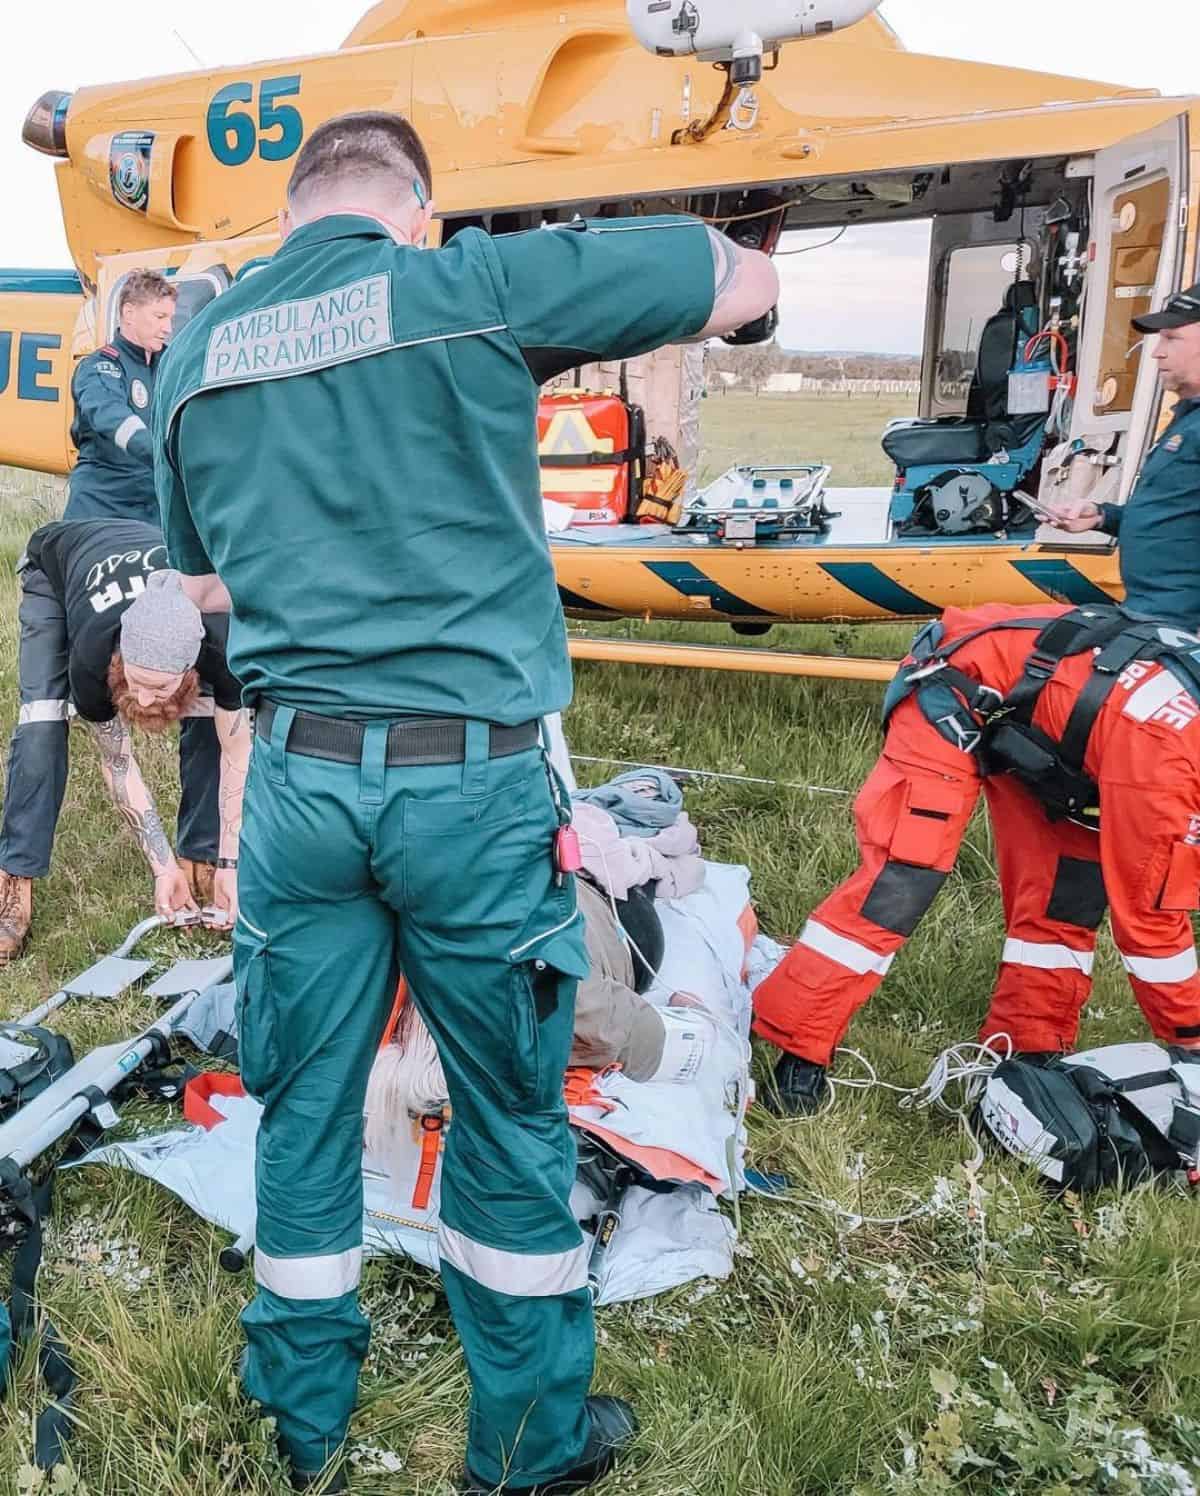 A severe injury treated by ambulance paramedics.